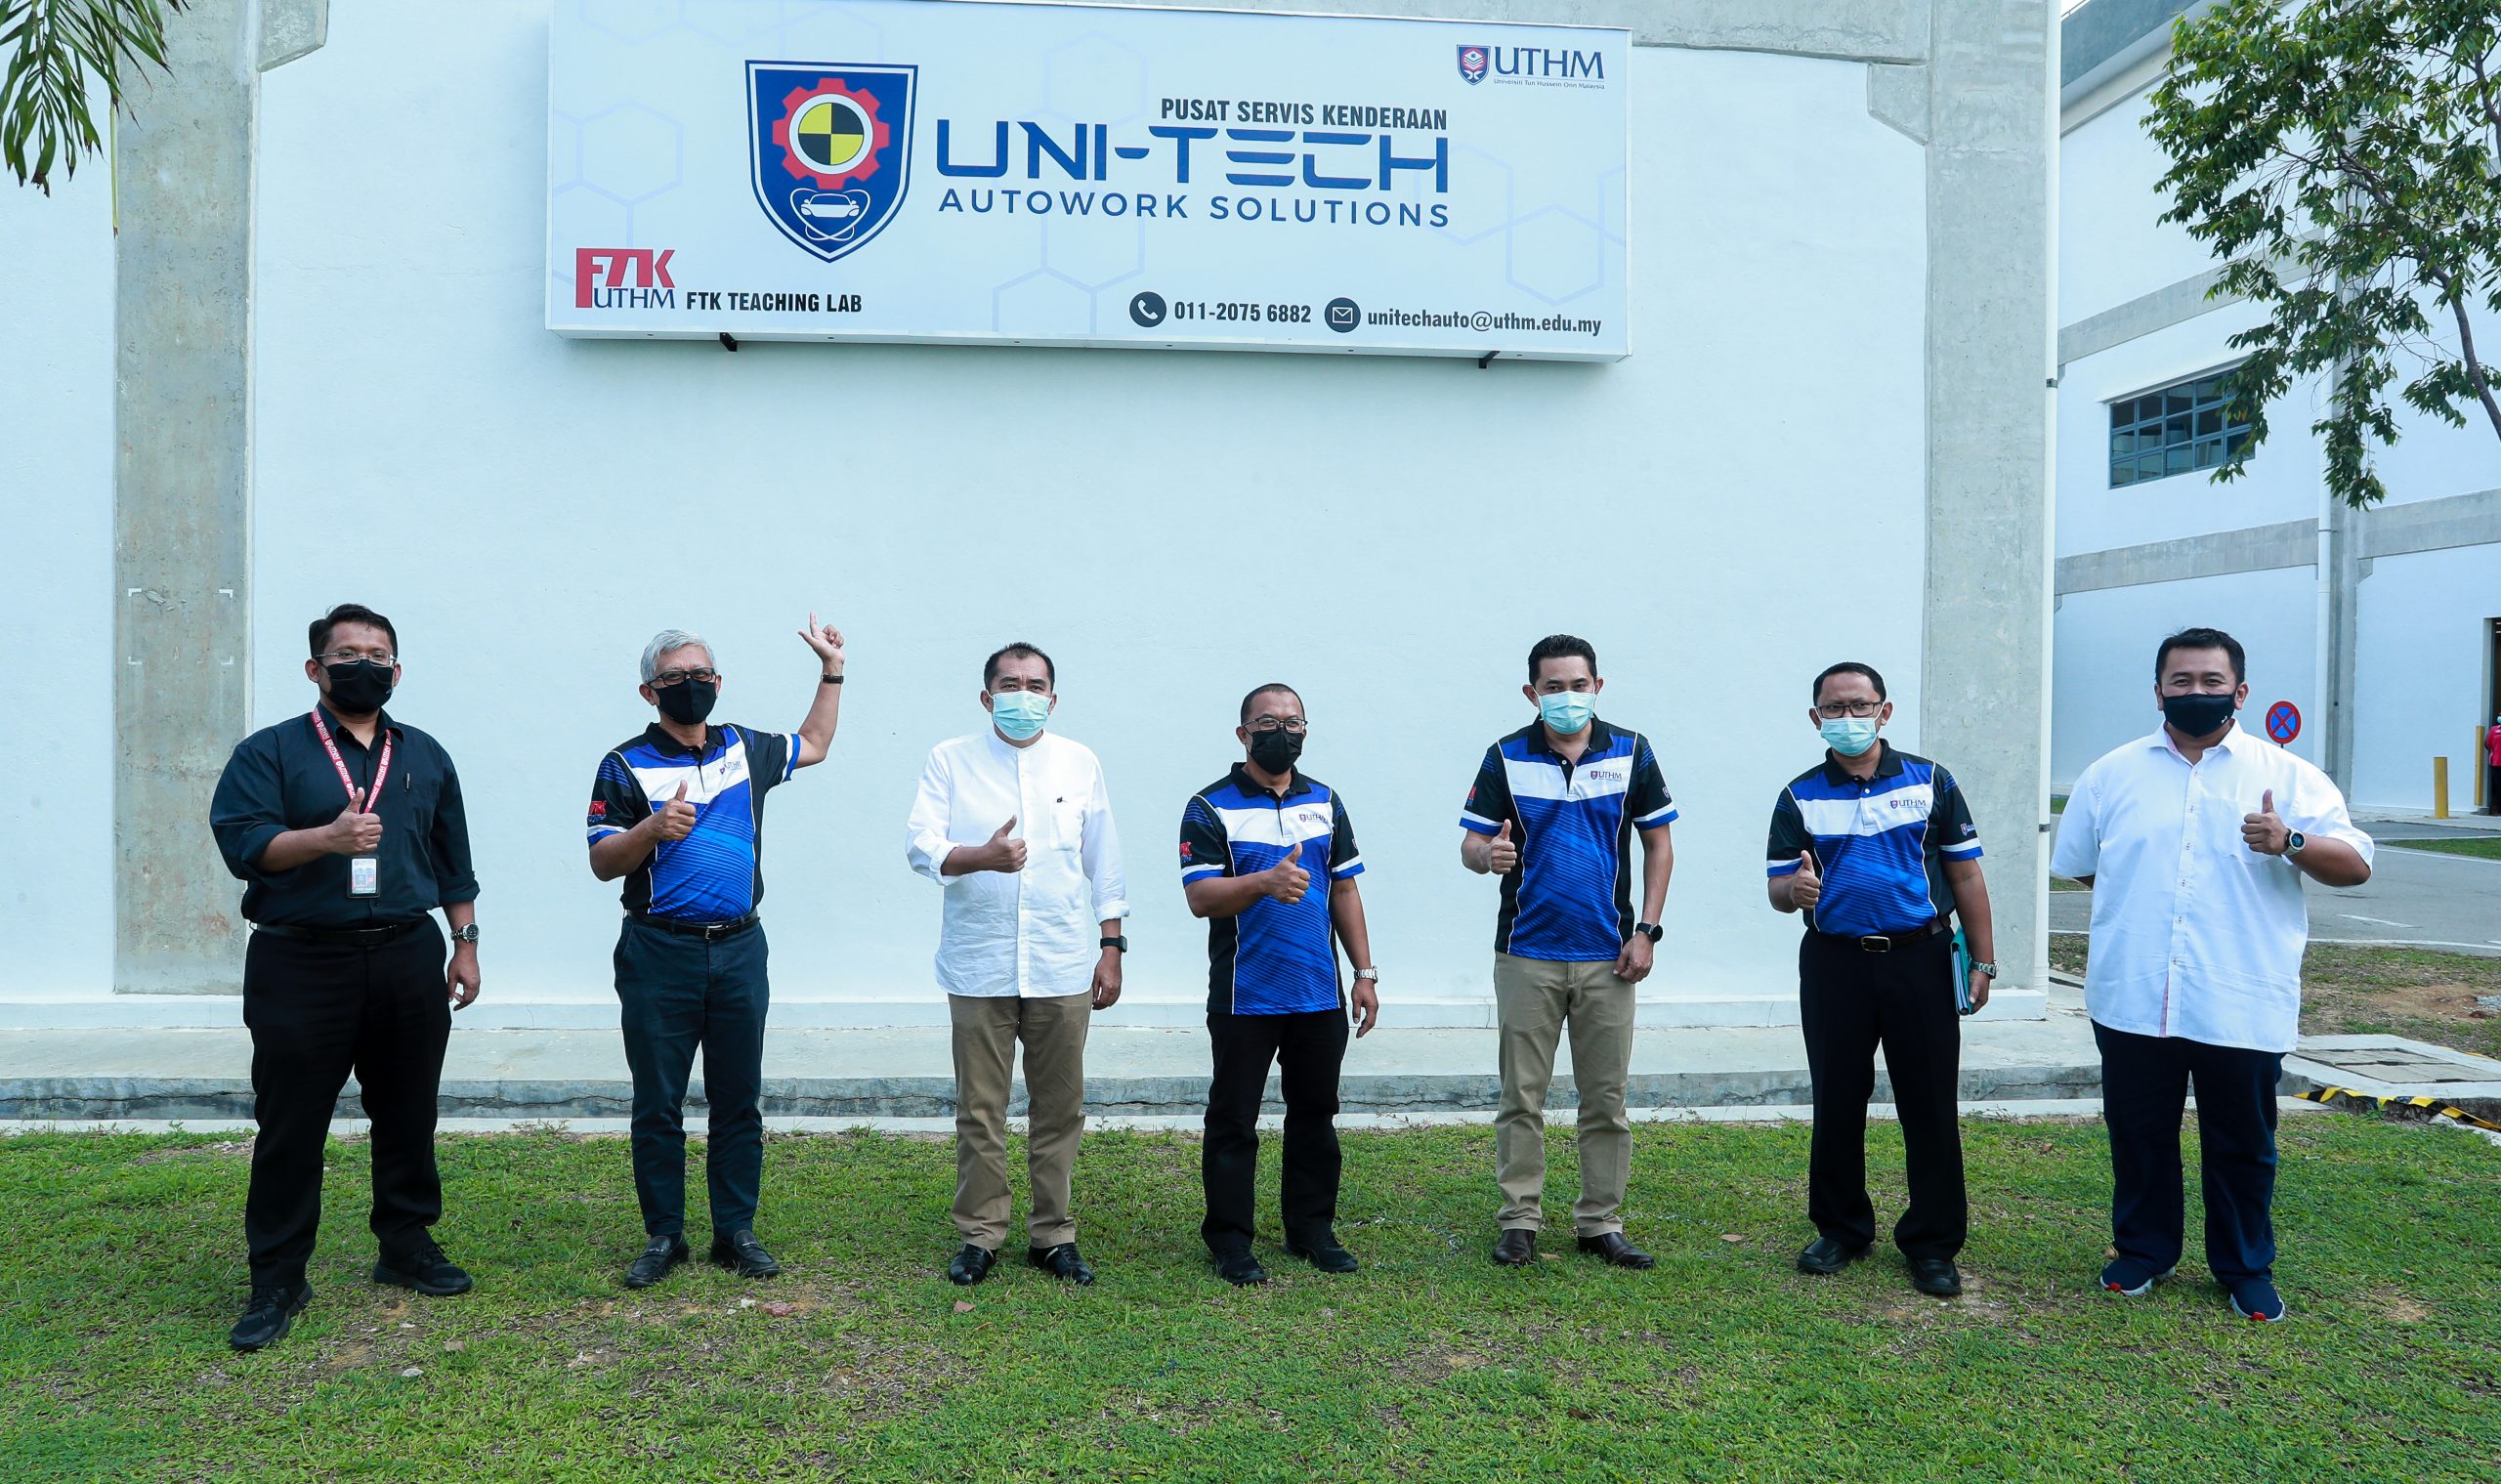 UTHM tubuh pusat servis kenderaan ‘Uni-Tech Autoworks Solutions’